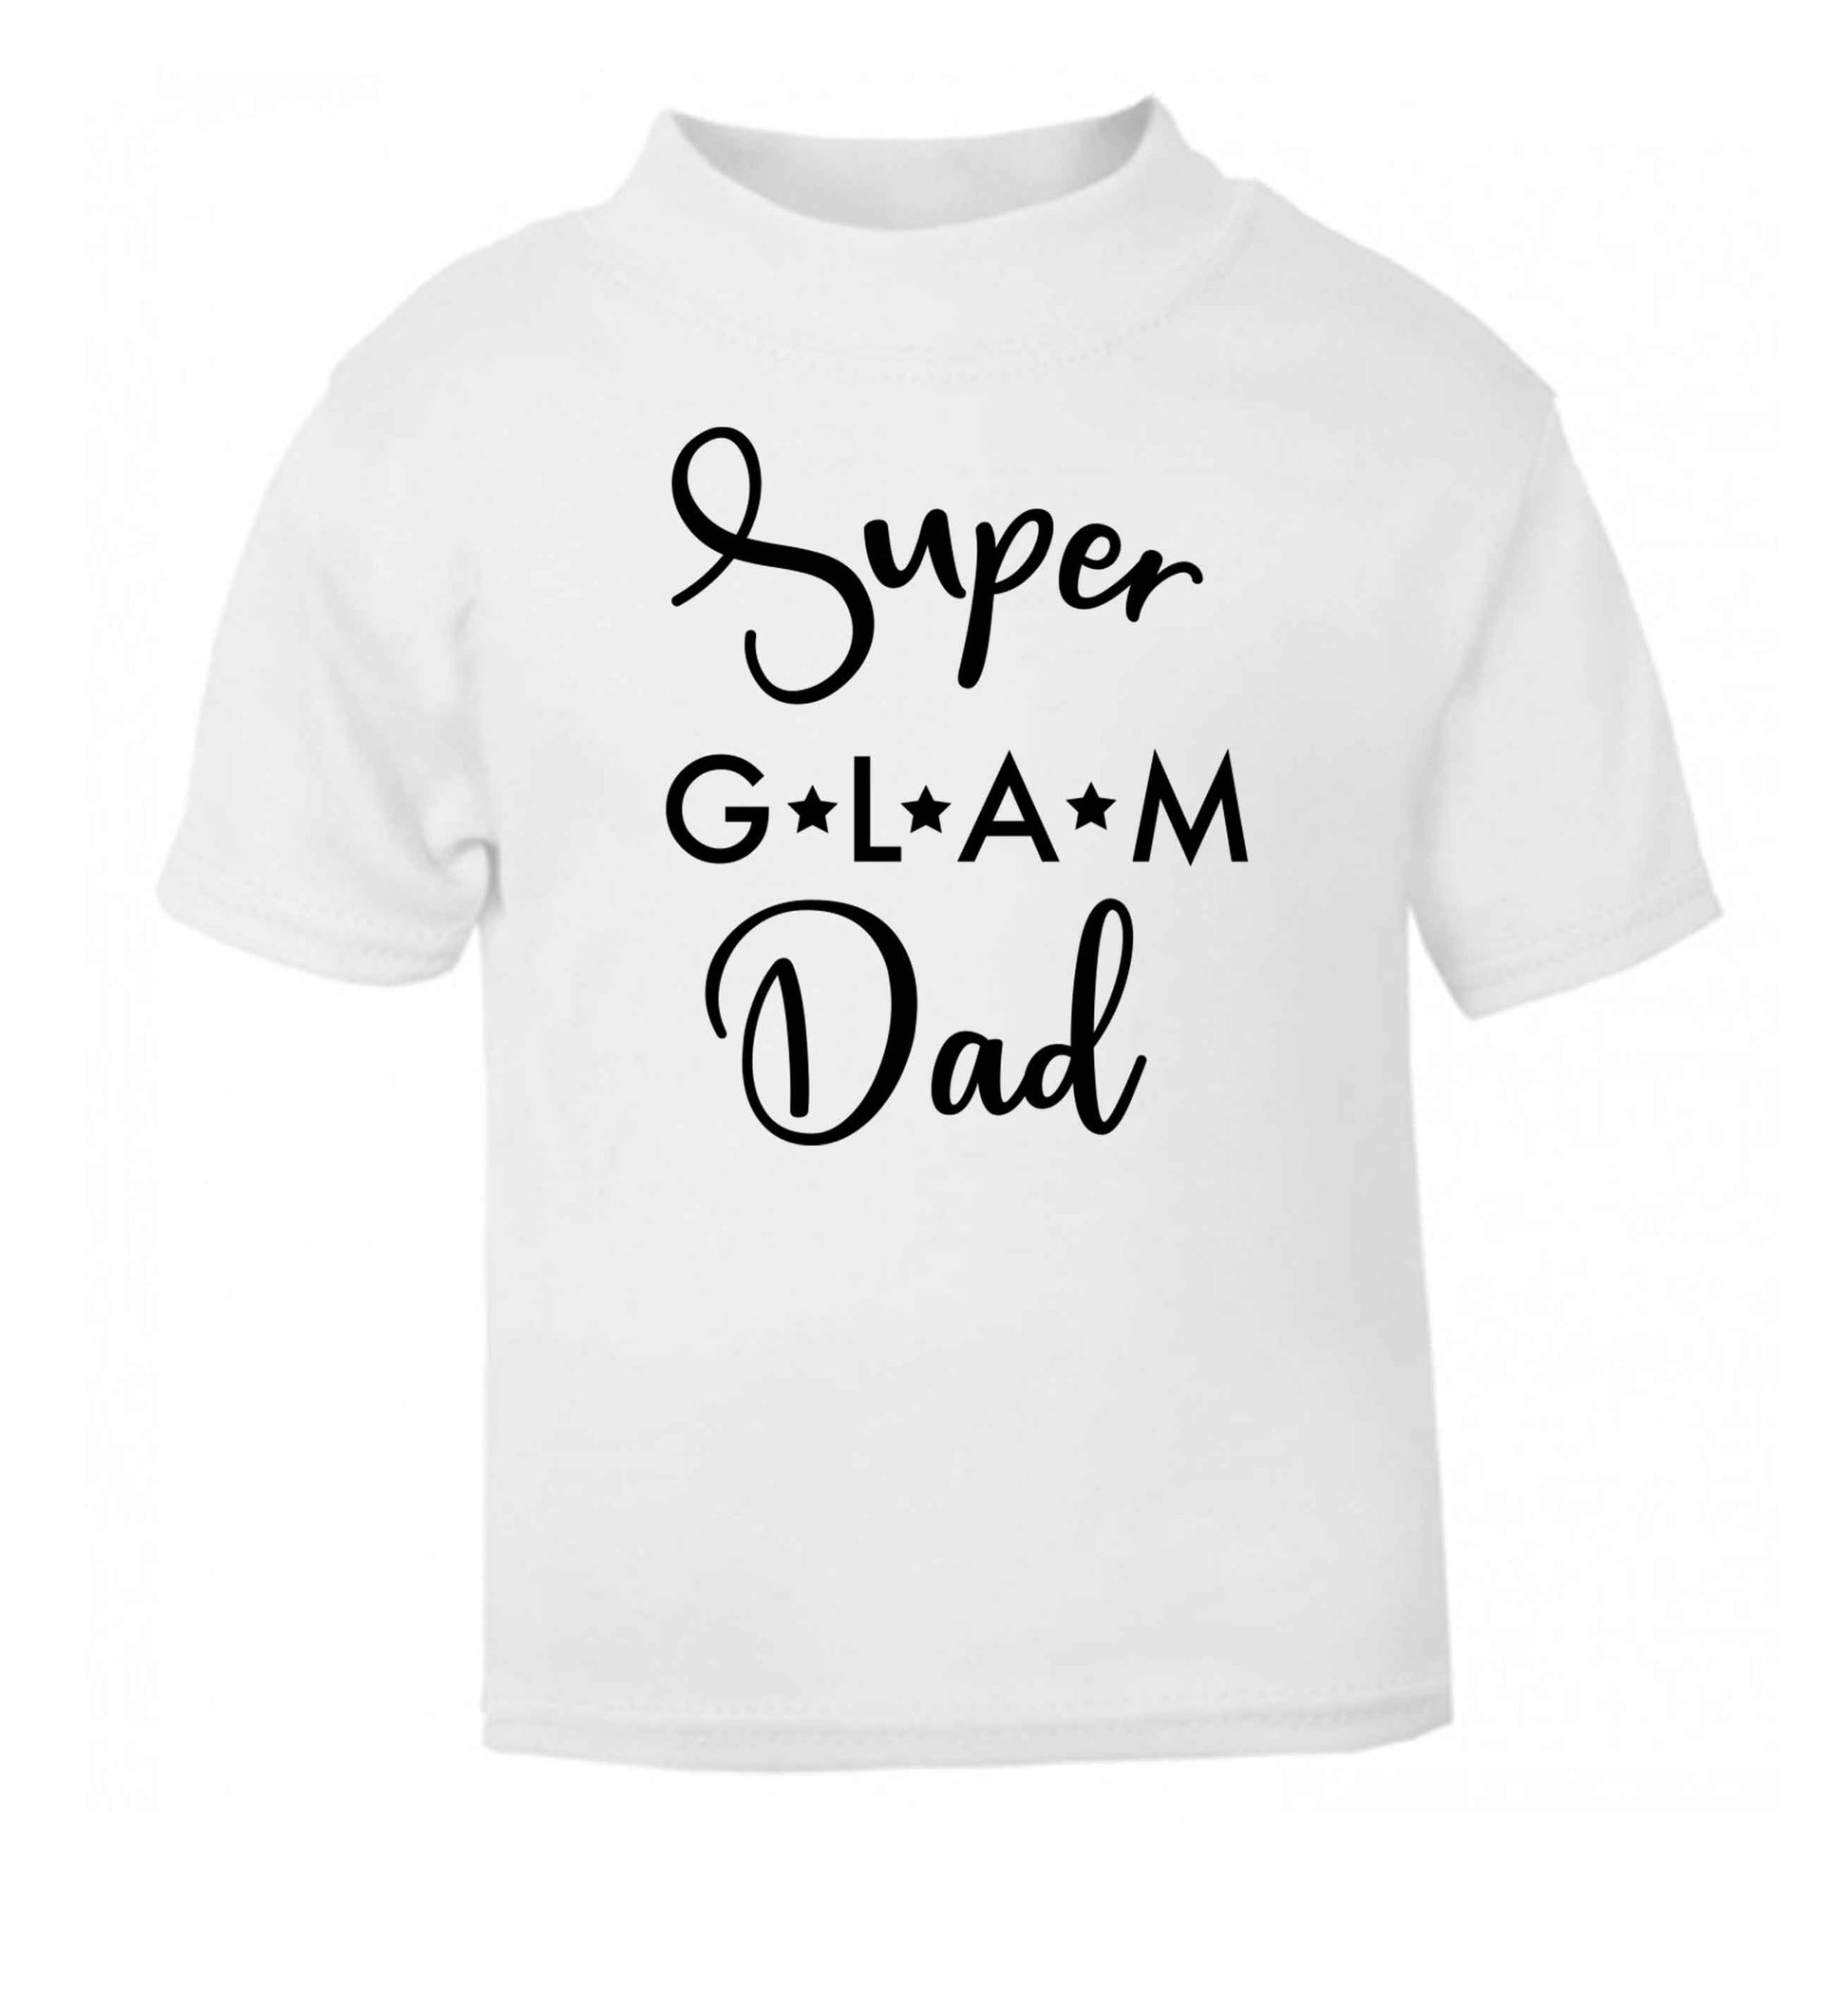 Super glam Dad white Baby Toddler Tshirt 2 Years